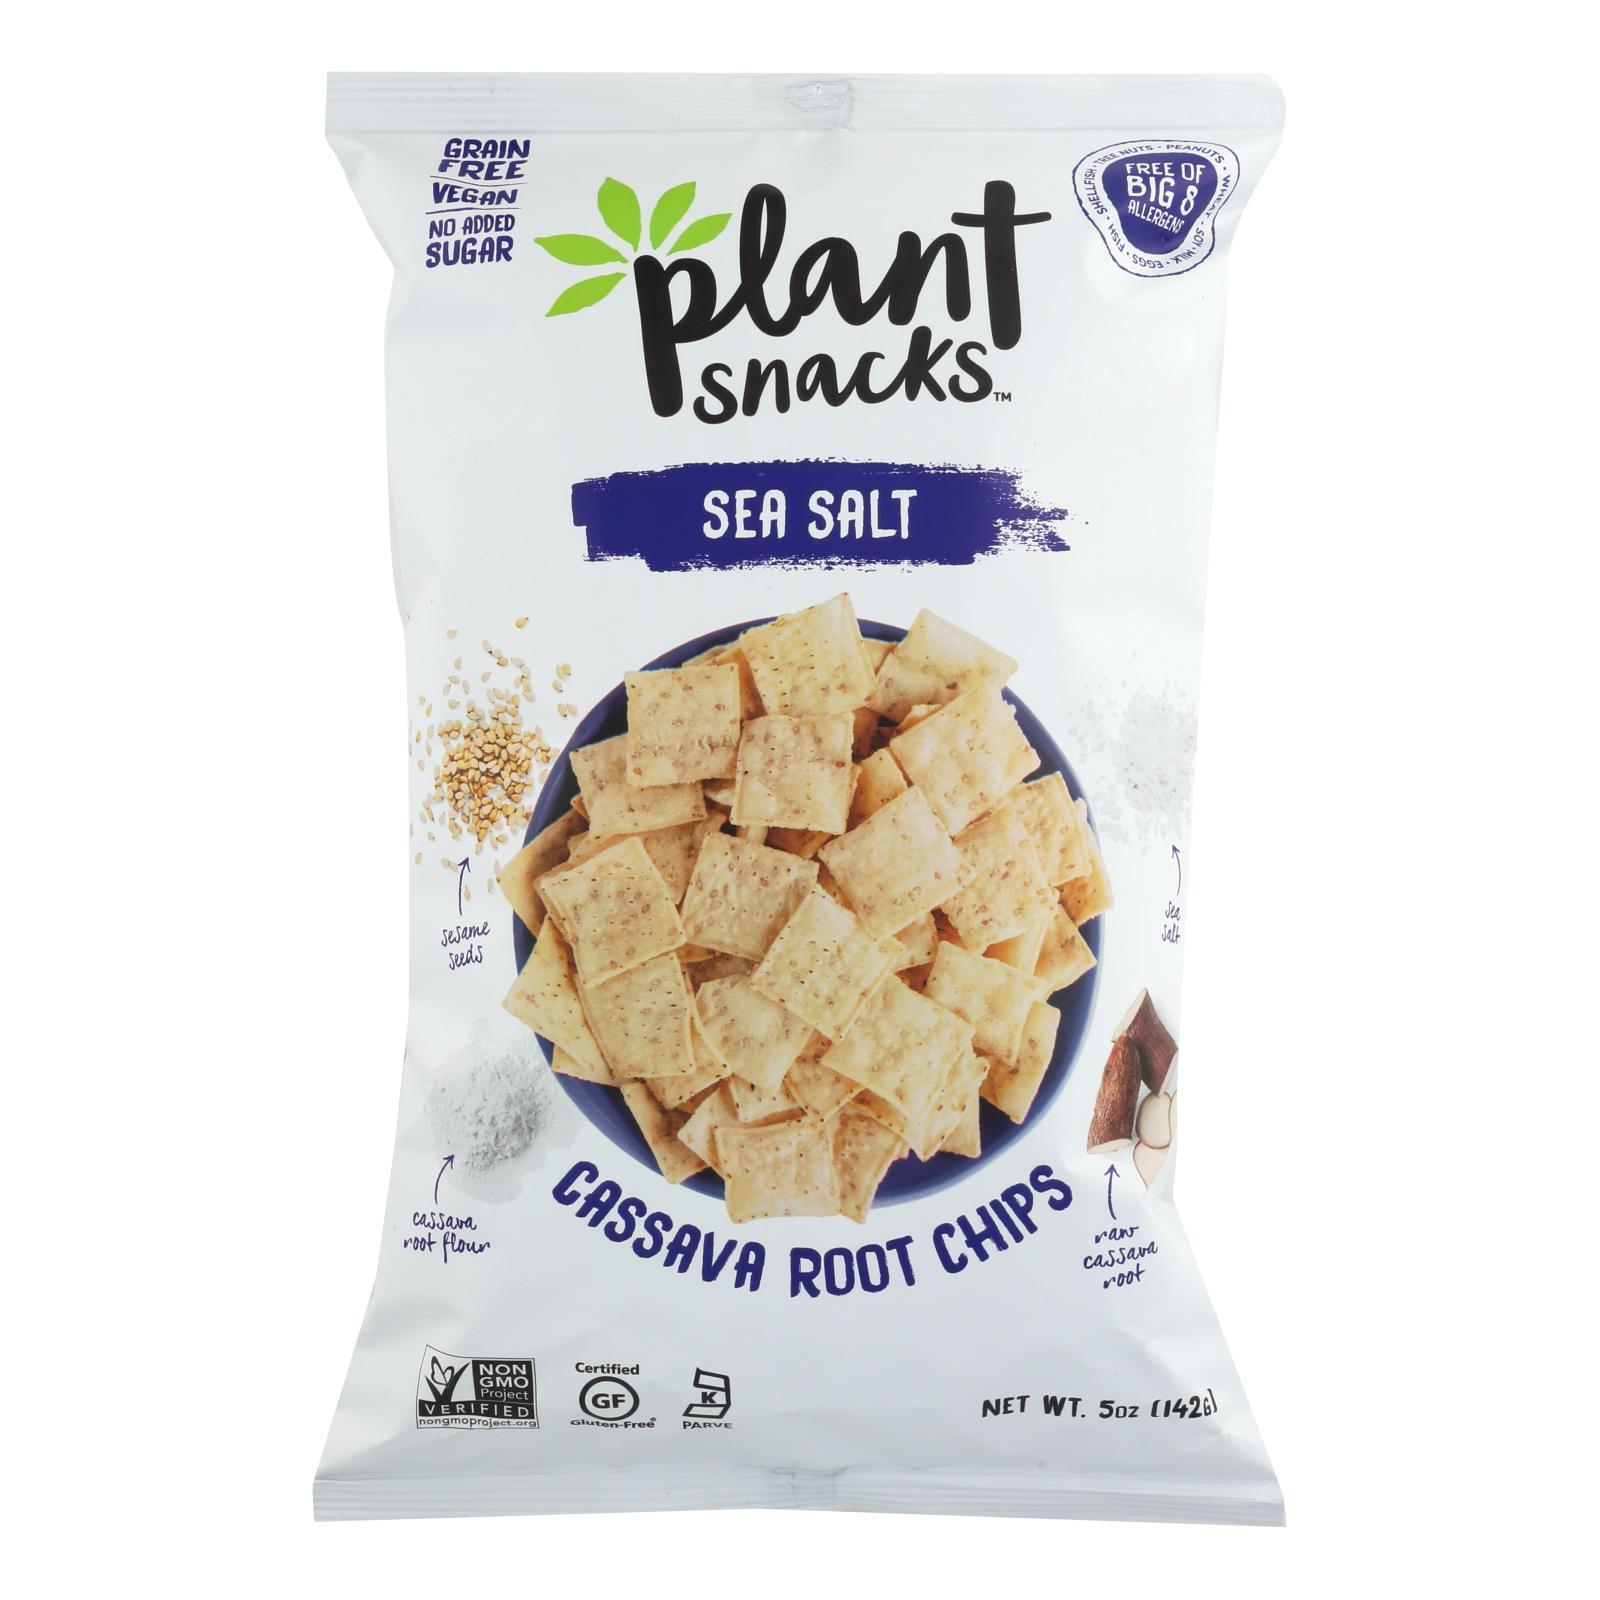 Cassava Crunch Plant Snacks, Sea Salt - 12개 묶음상품 - 5 OZ